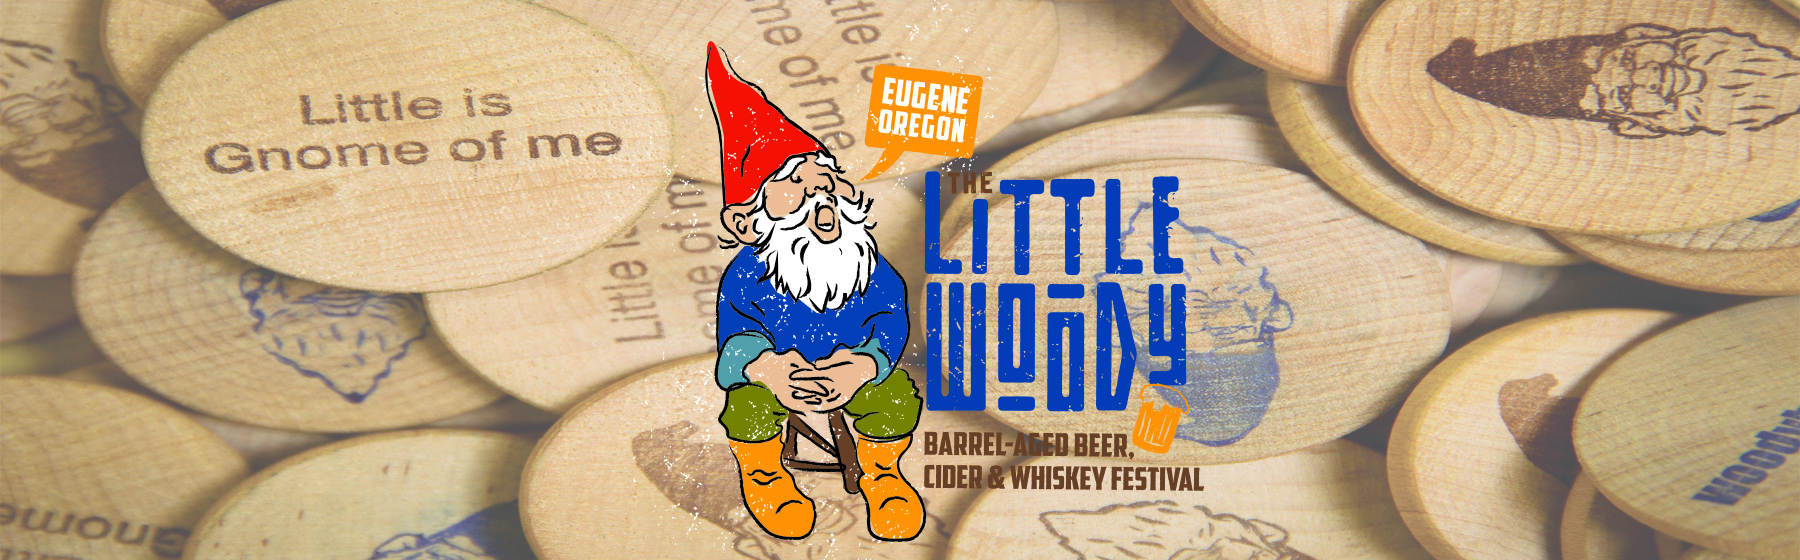 The Little Woody Barrel Aged Beer, Cider & Whiskey Festival - Eugene